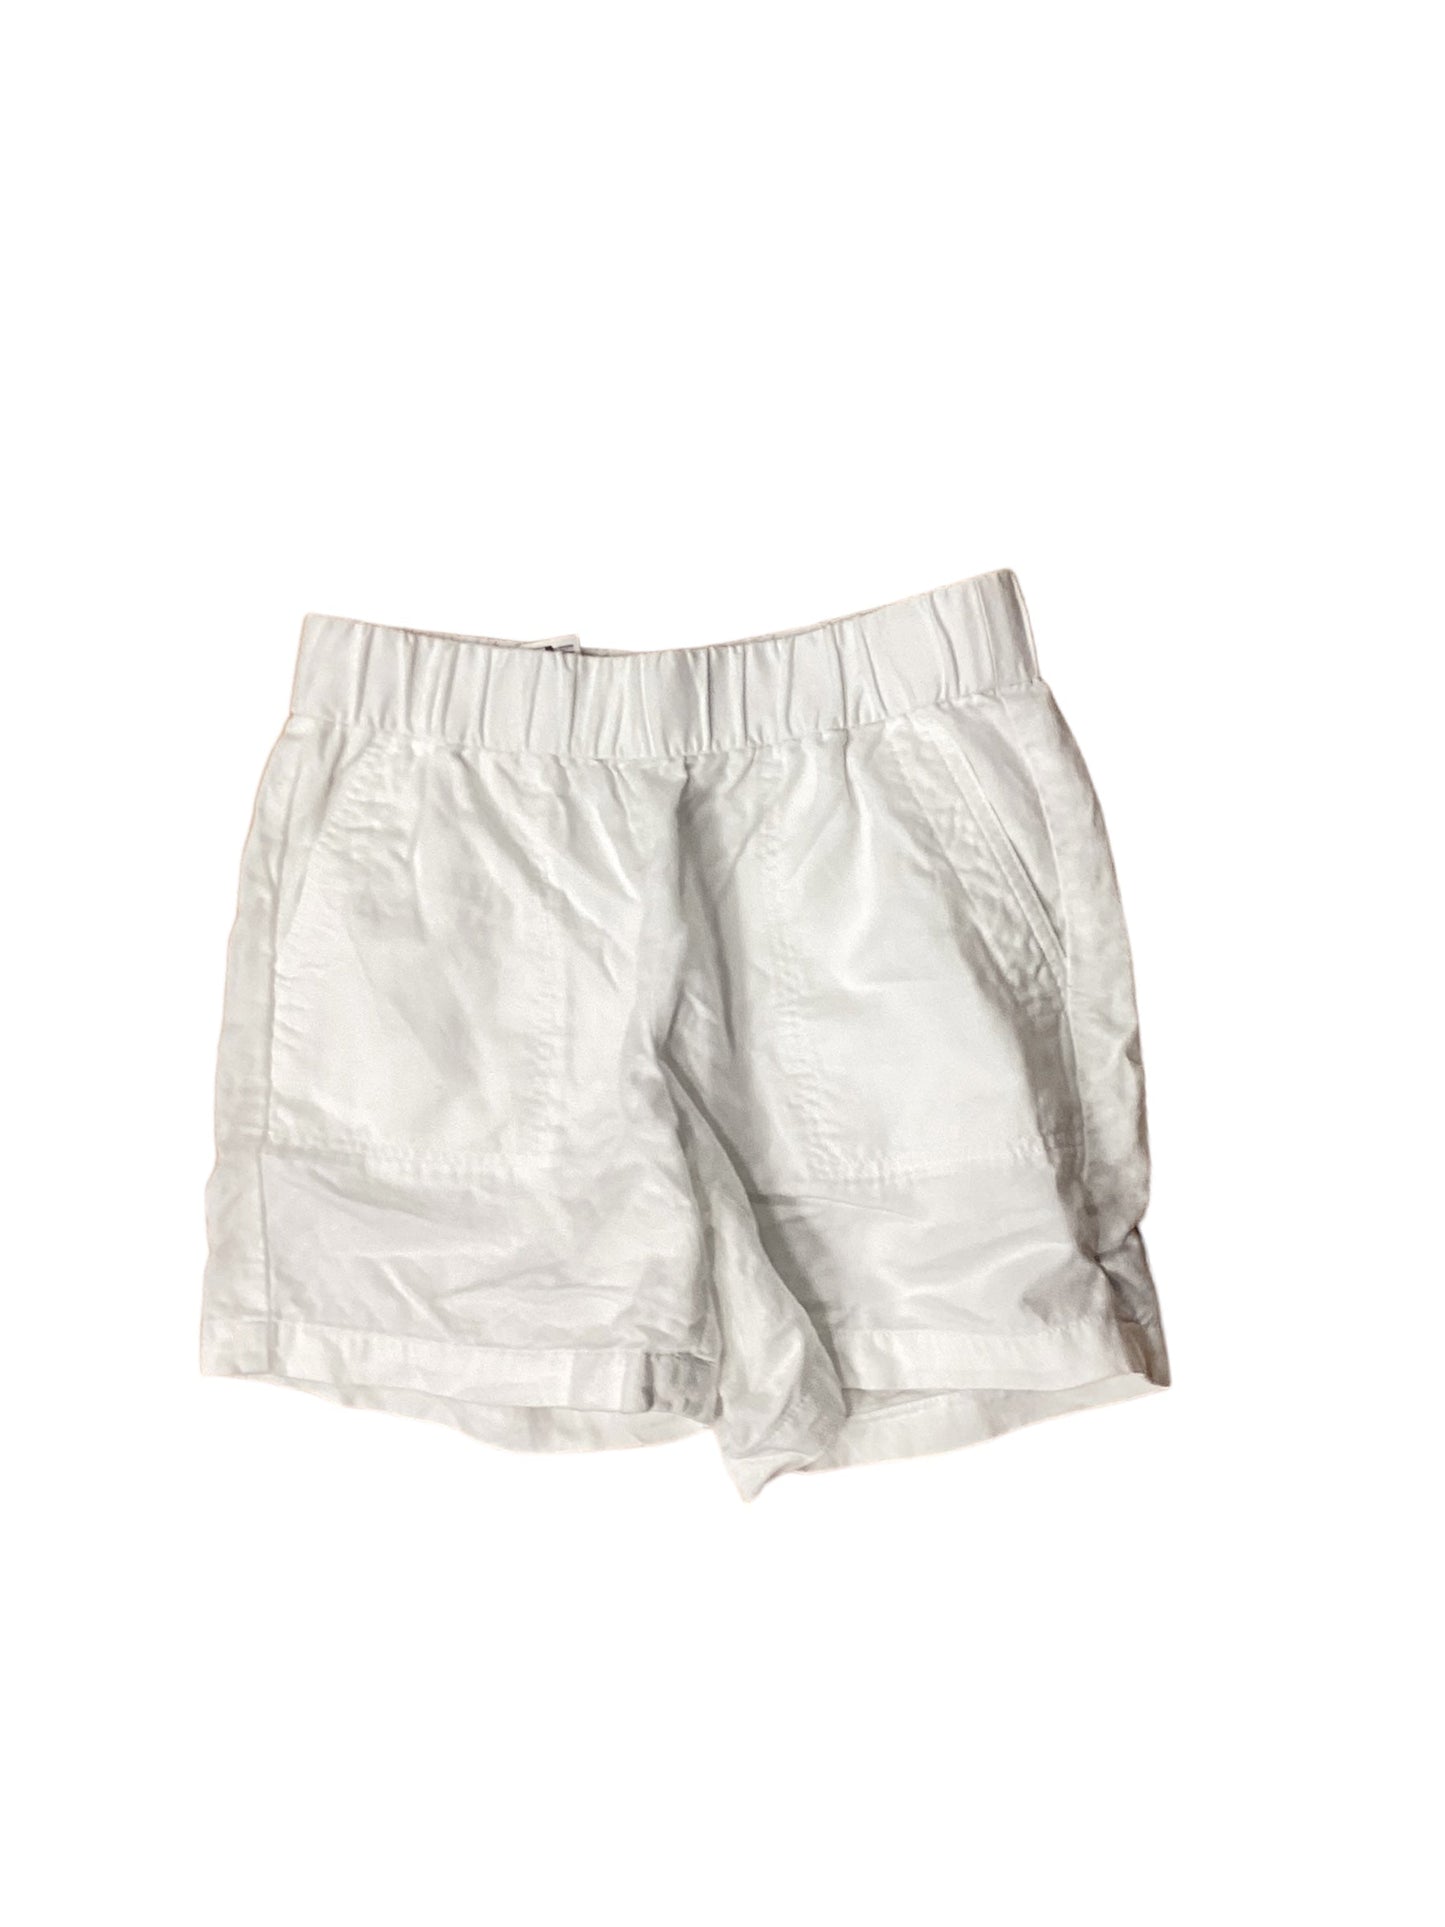 White Shorts Talbots, Size Petite